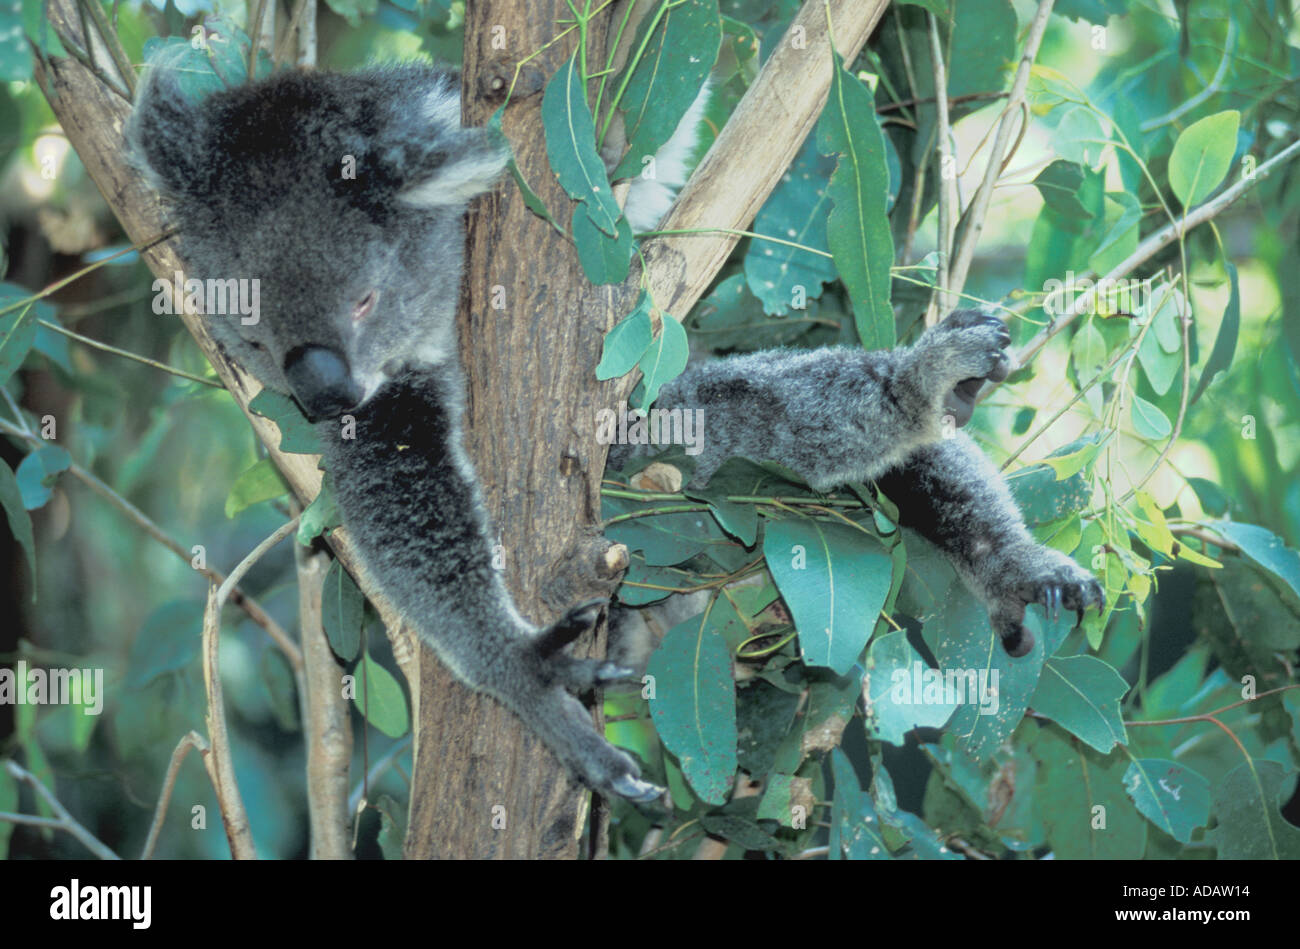 Koala sprawled amongst tree branches Queensland Australi Stock Photo